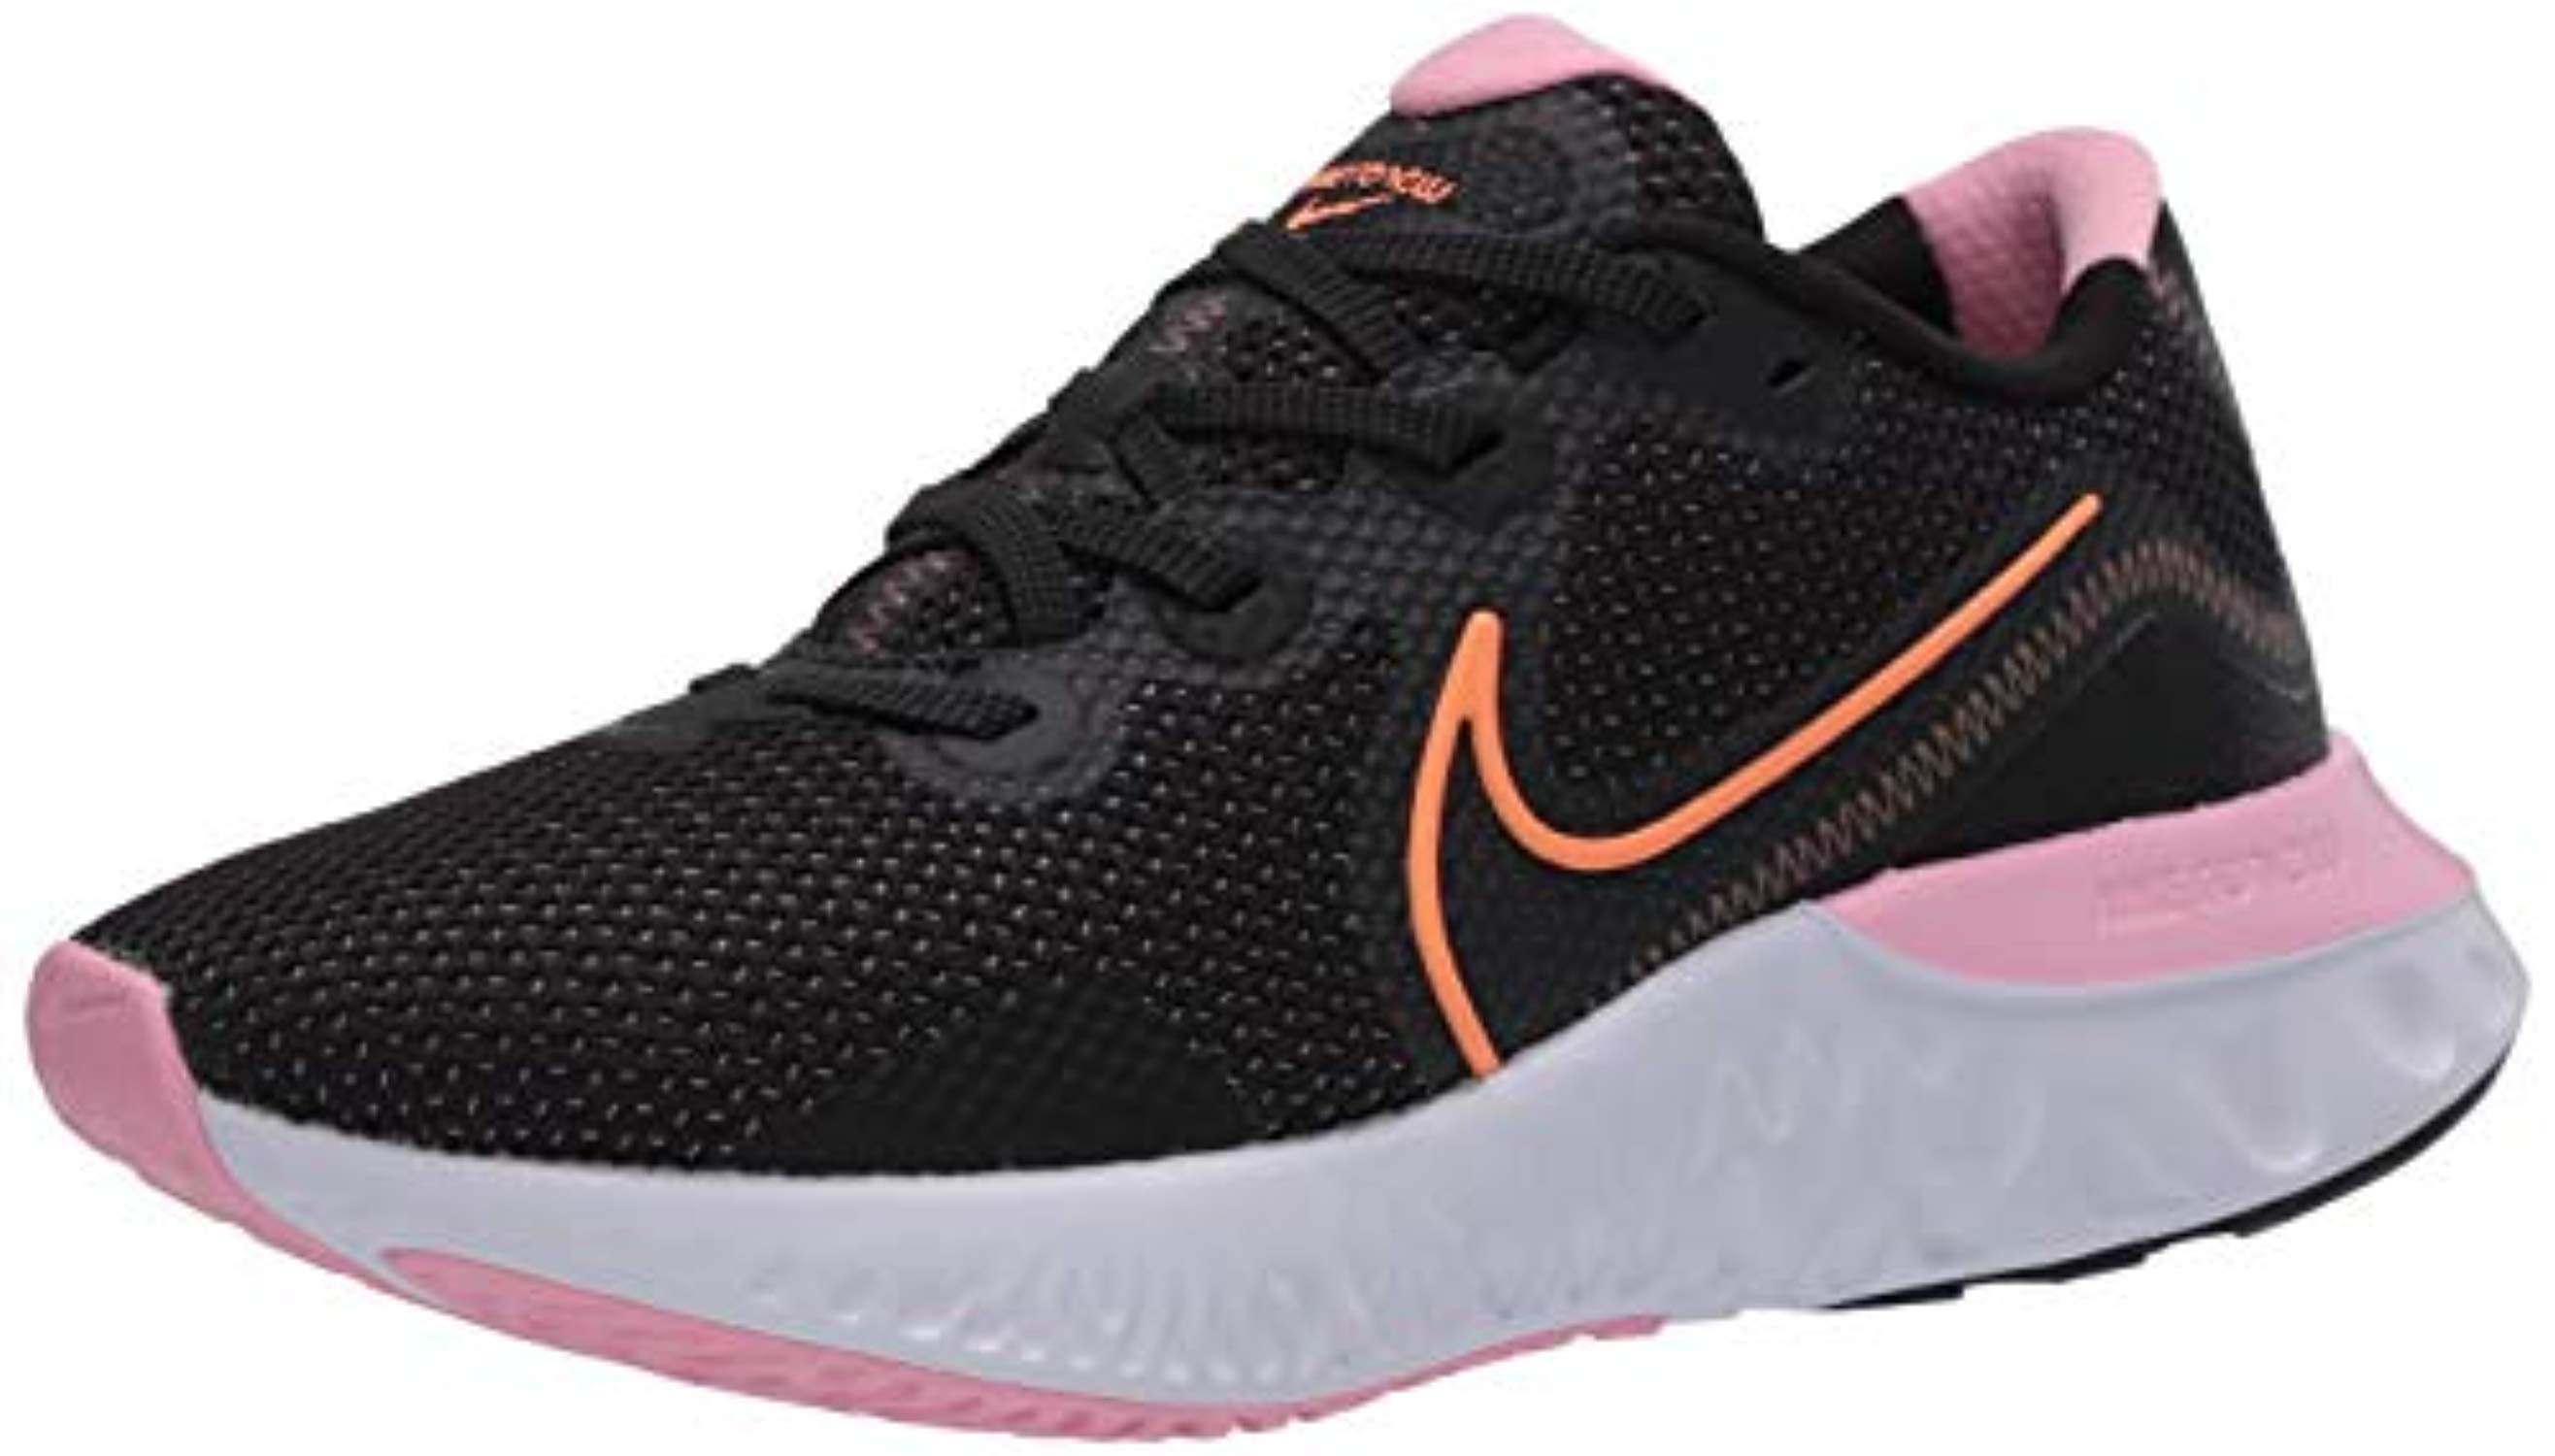 Nike Women's Renew Run Running Shoes (Black/Pink/Orange, Numeric_9